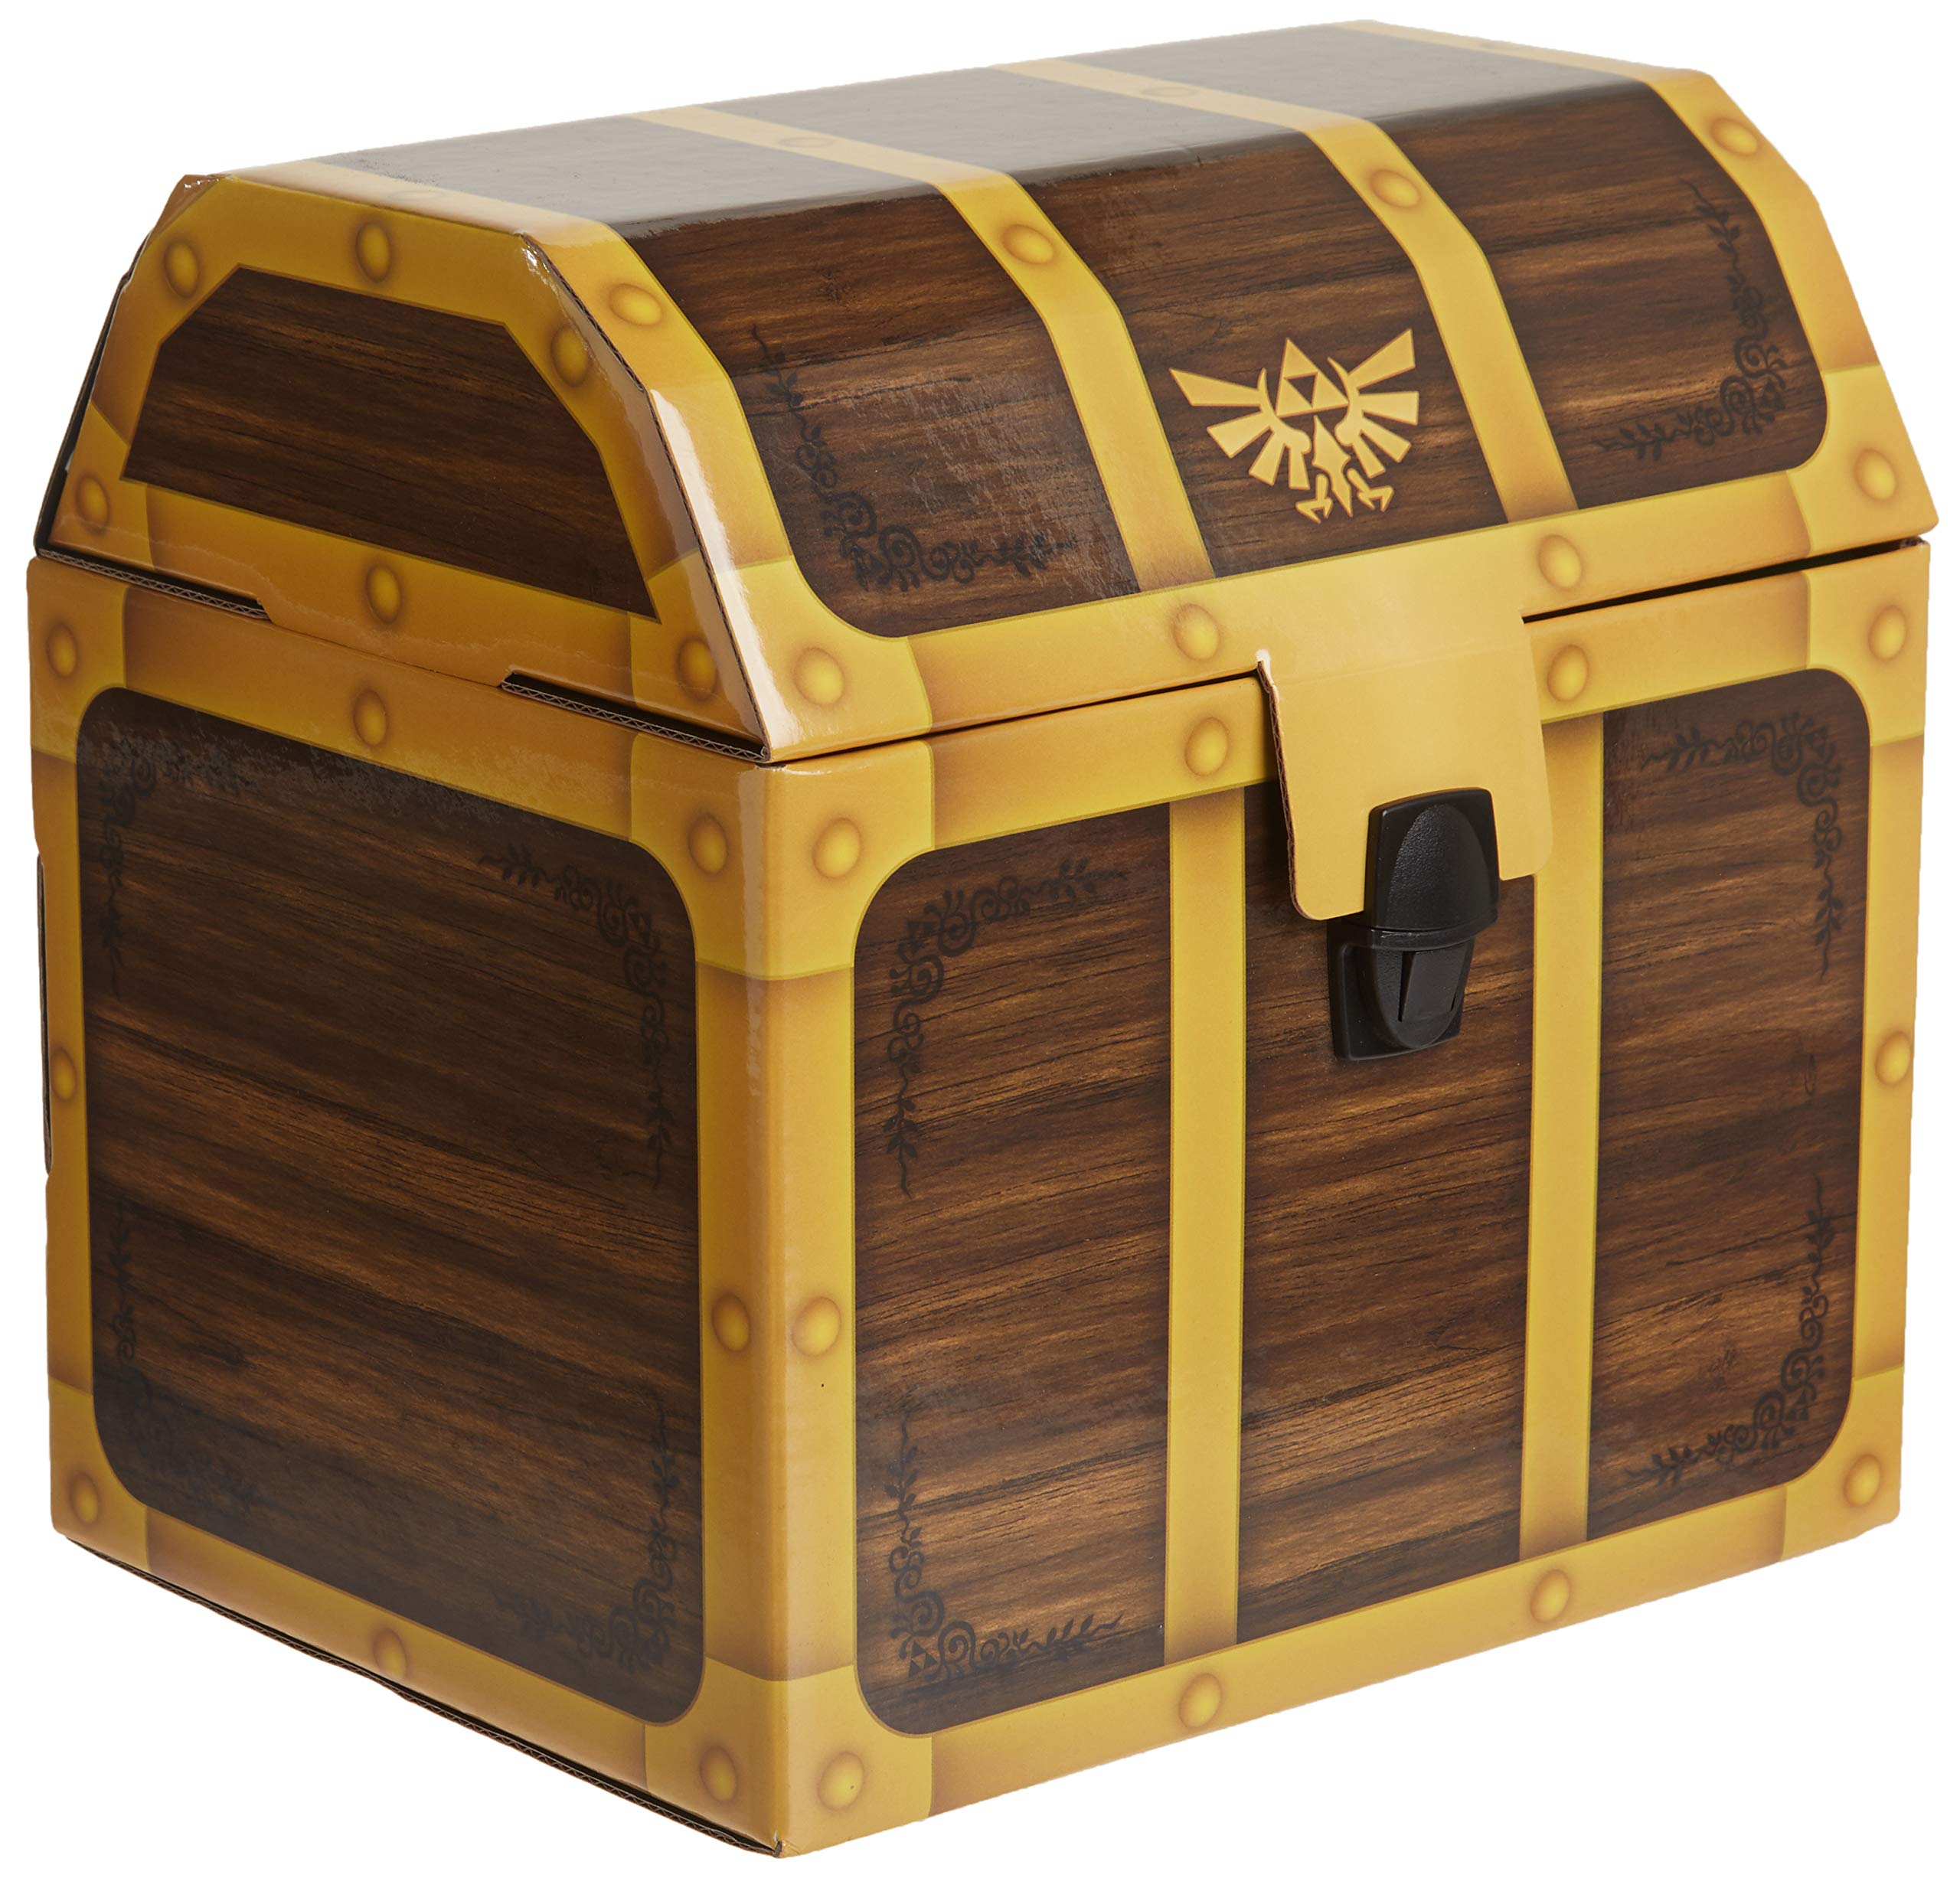 The Legend of Zelda - Legendary Edition Box Set